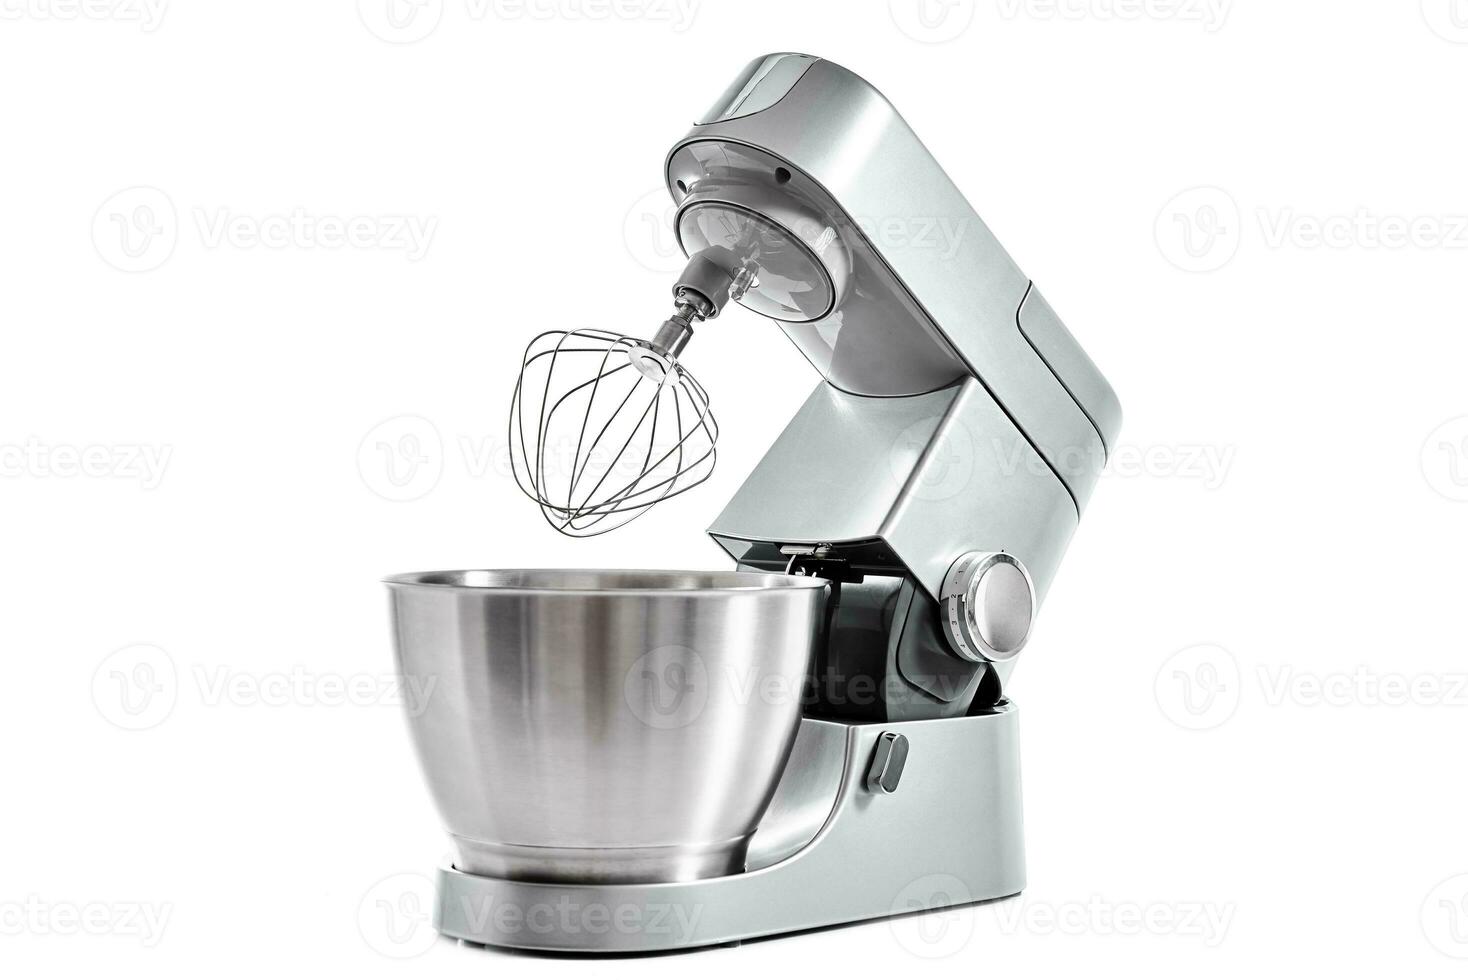 Kitchen electric mixer on white background, Food processor closeup photo